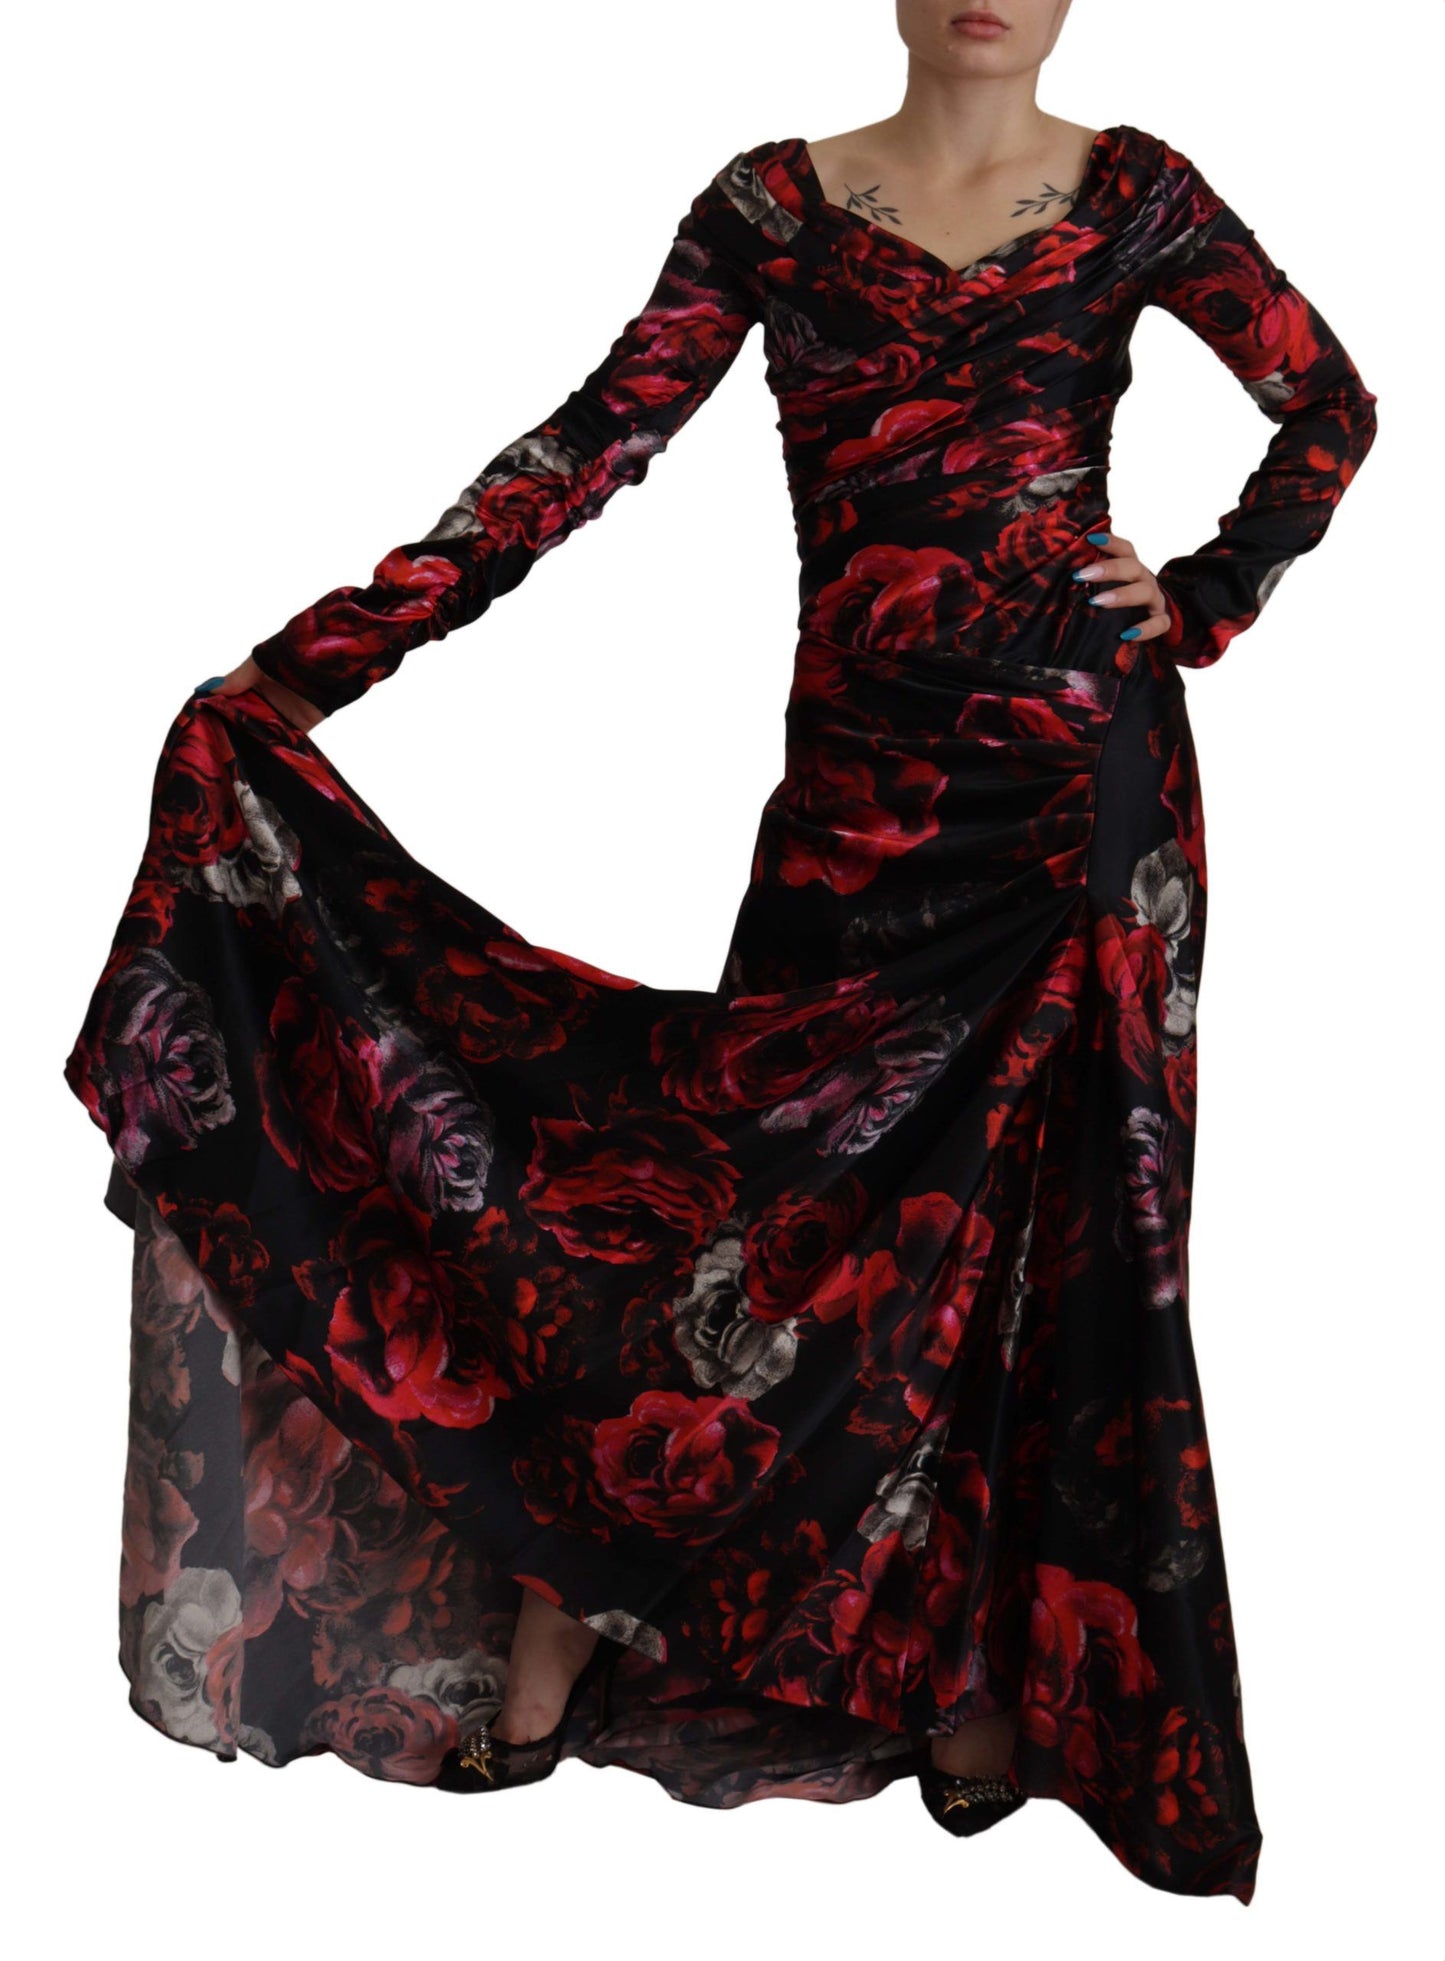 Dolce & Gabbana Black Floral Roses A-Line Sheath Gown Dress